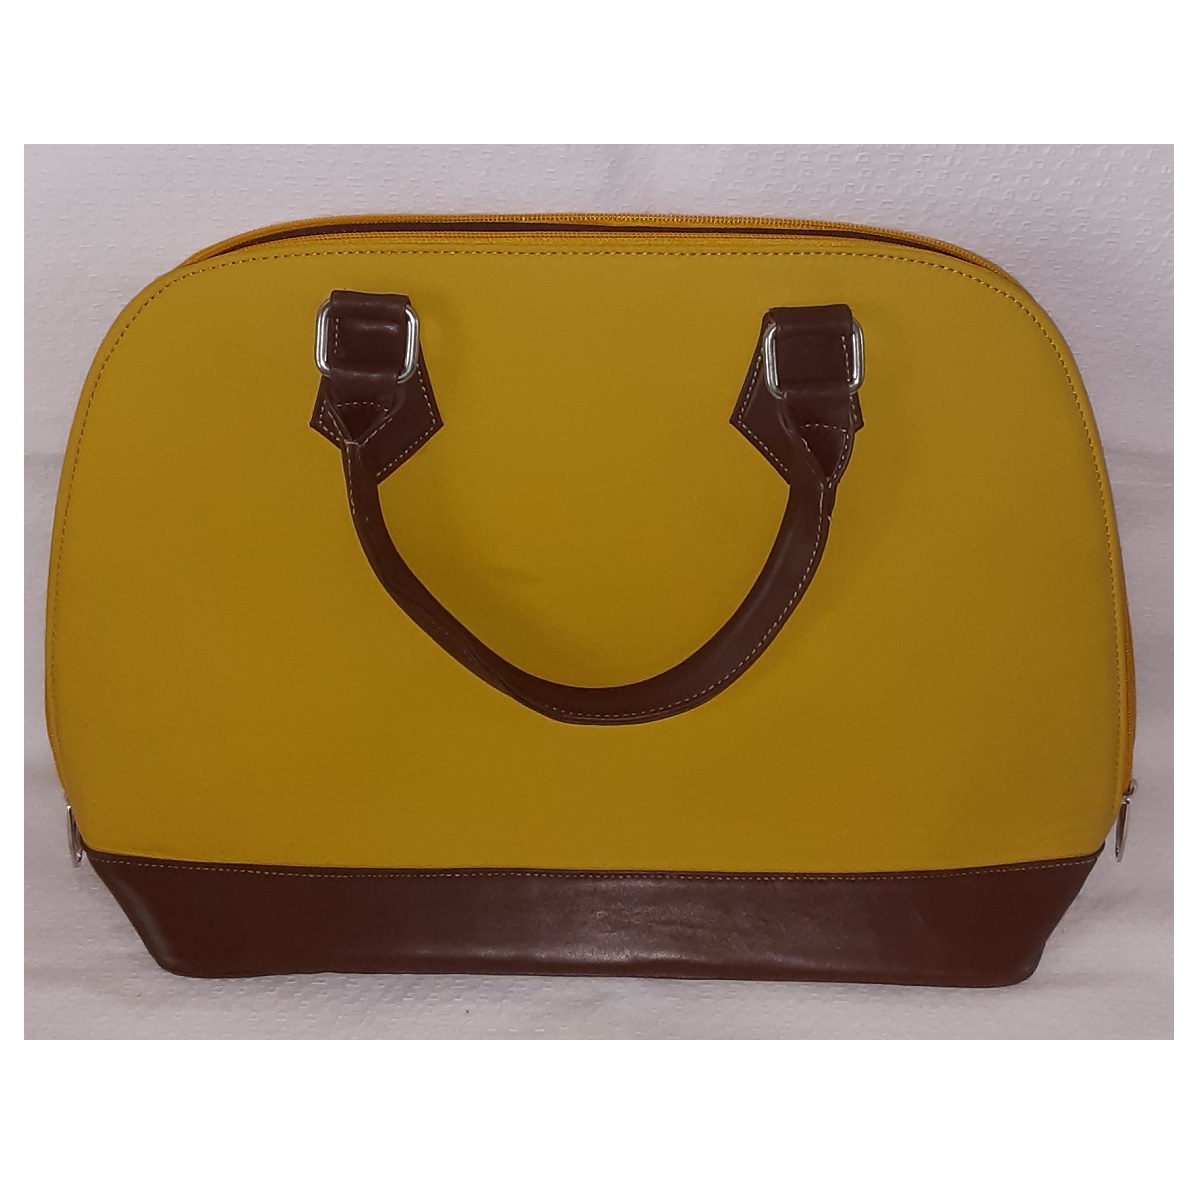 Mustard Yellow Genuine Leather Handbag. Handmade in Pakistan